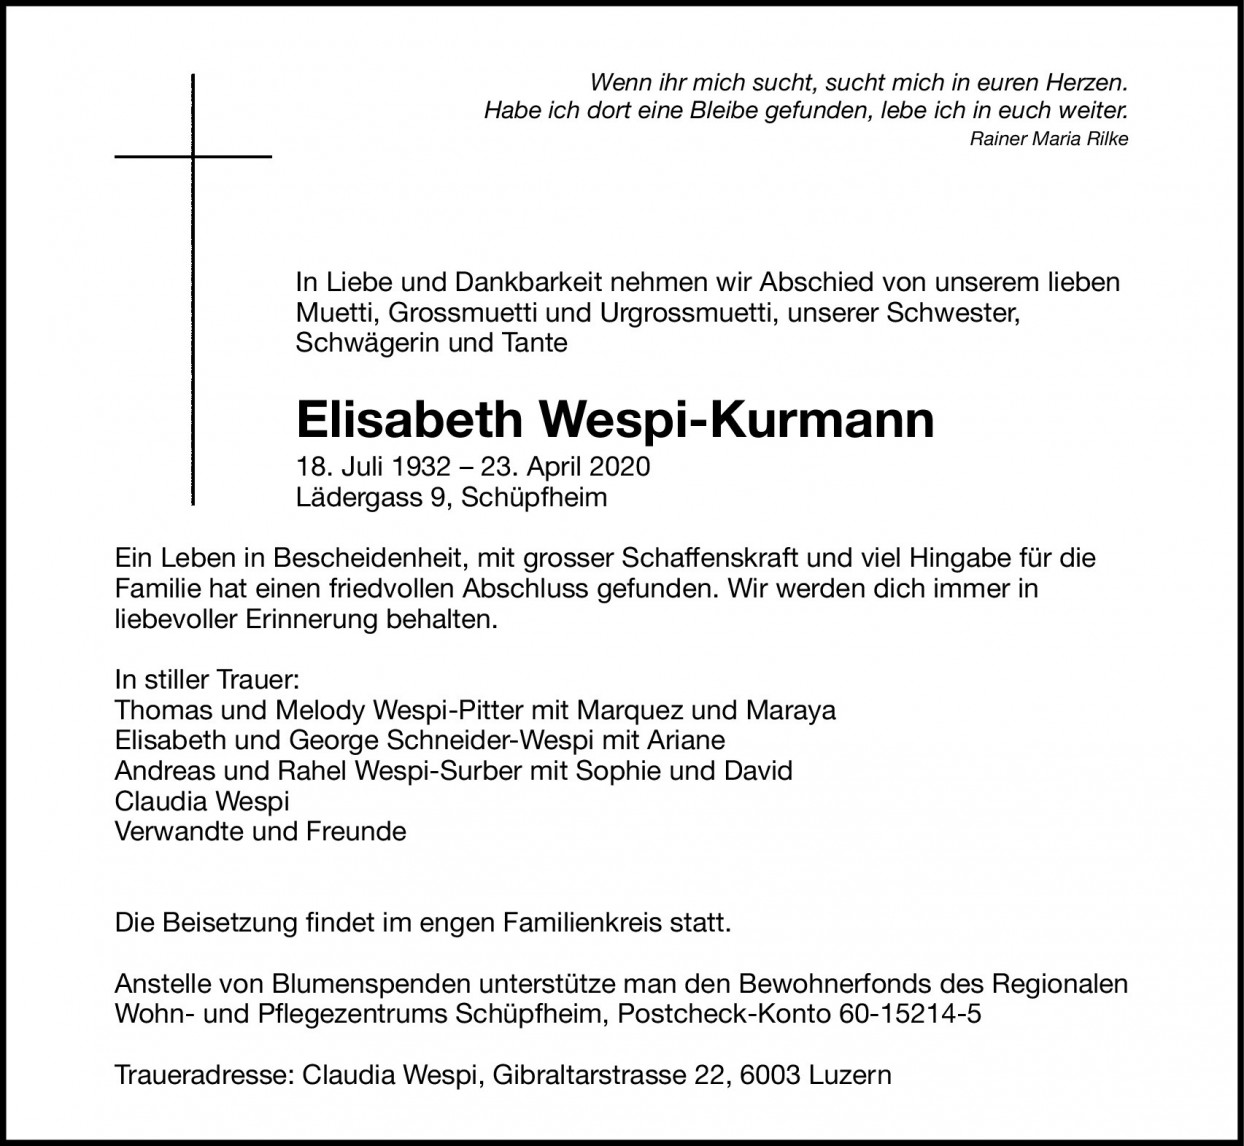 Elisabeth Wespi-Kurmann